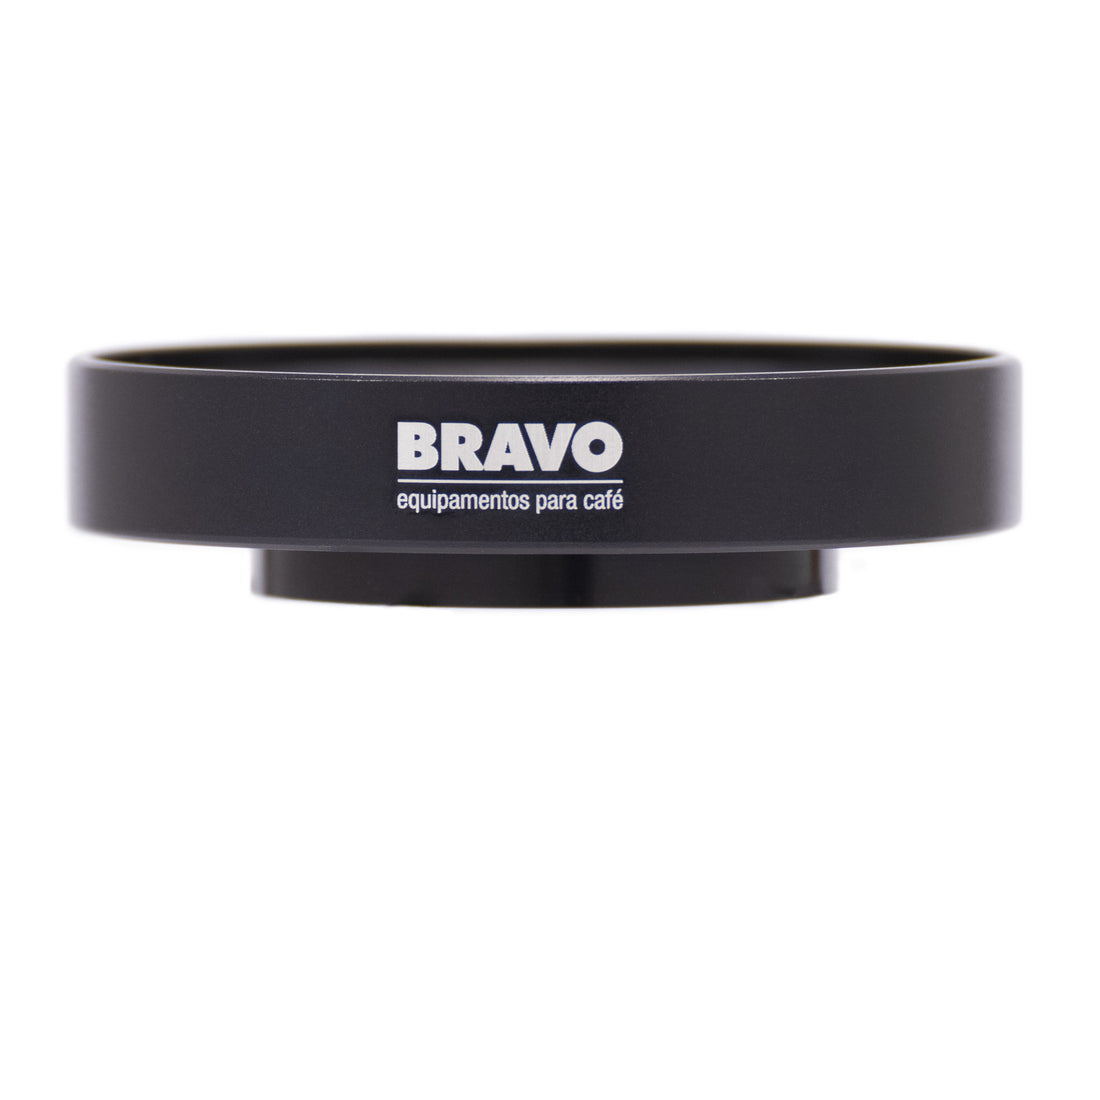 Bravo 54 mm funnel on white.